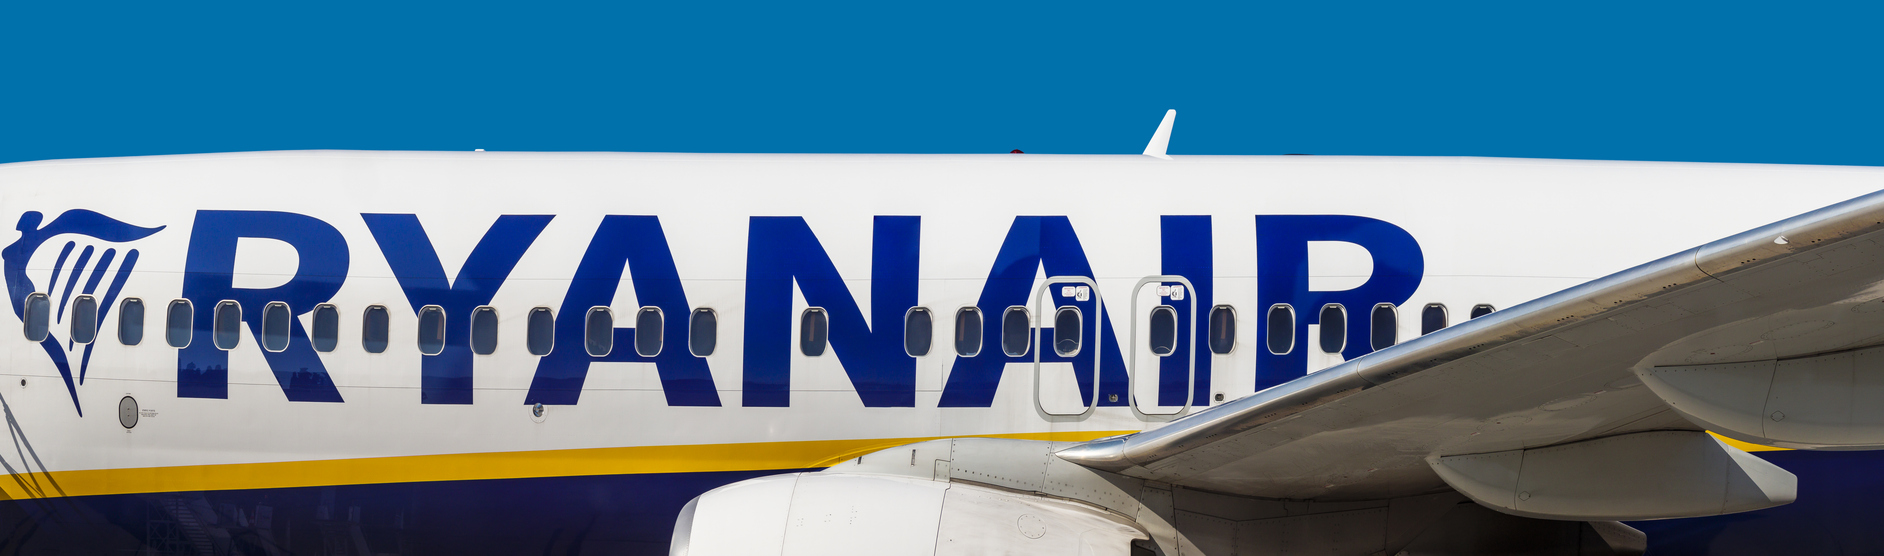 Acquisto biglietti aerei Ryanair